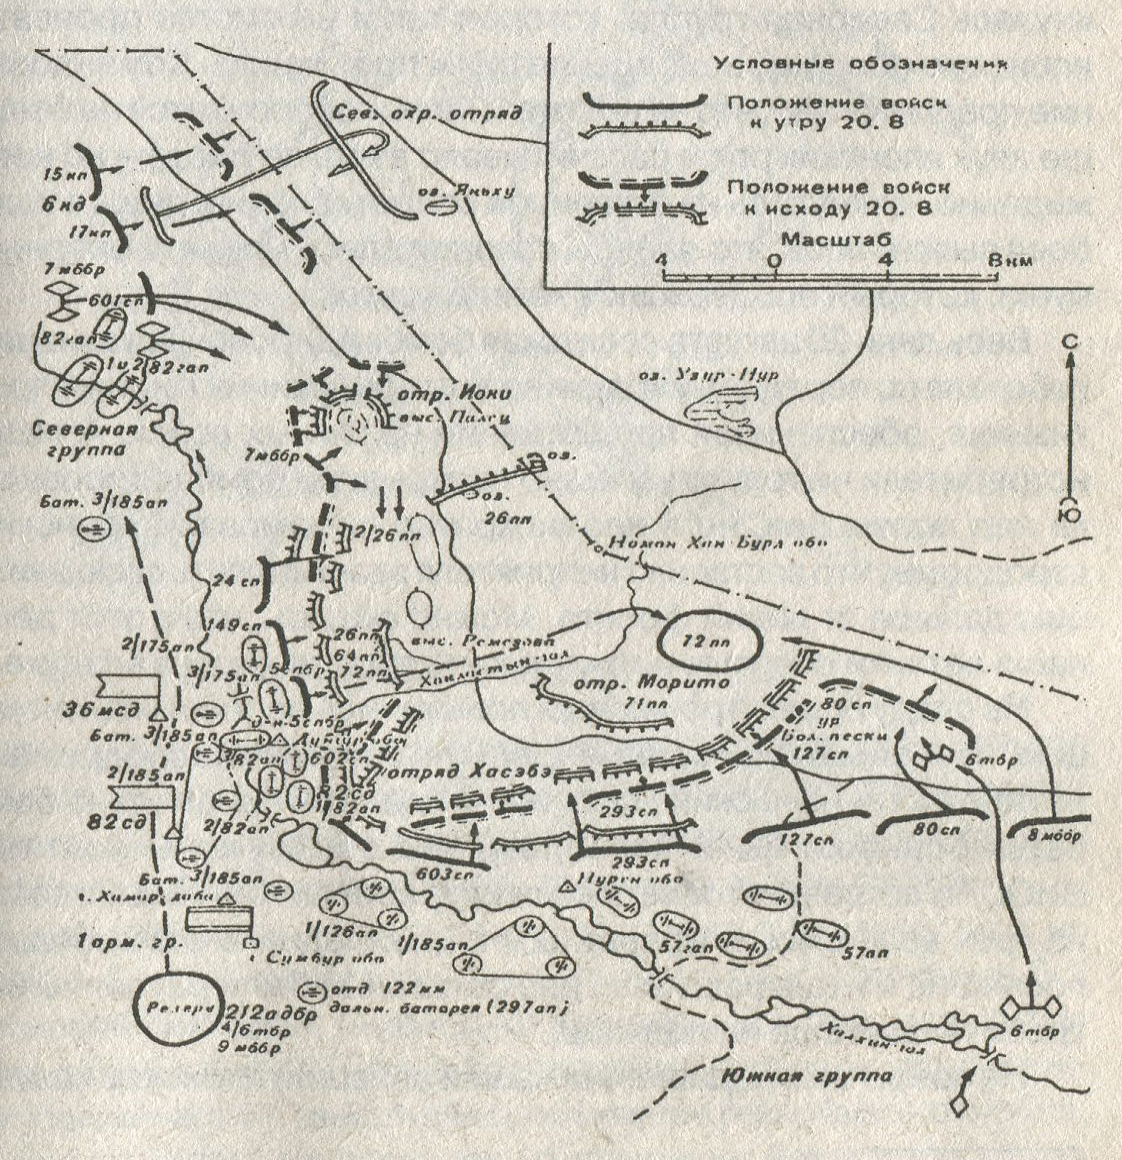 Карта. Боевые действия на Халхин-Голе 20 августа 1939 г.